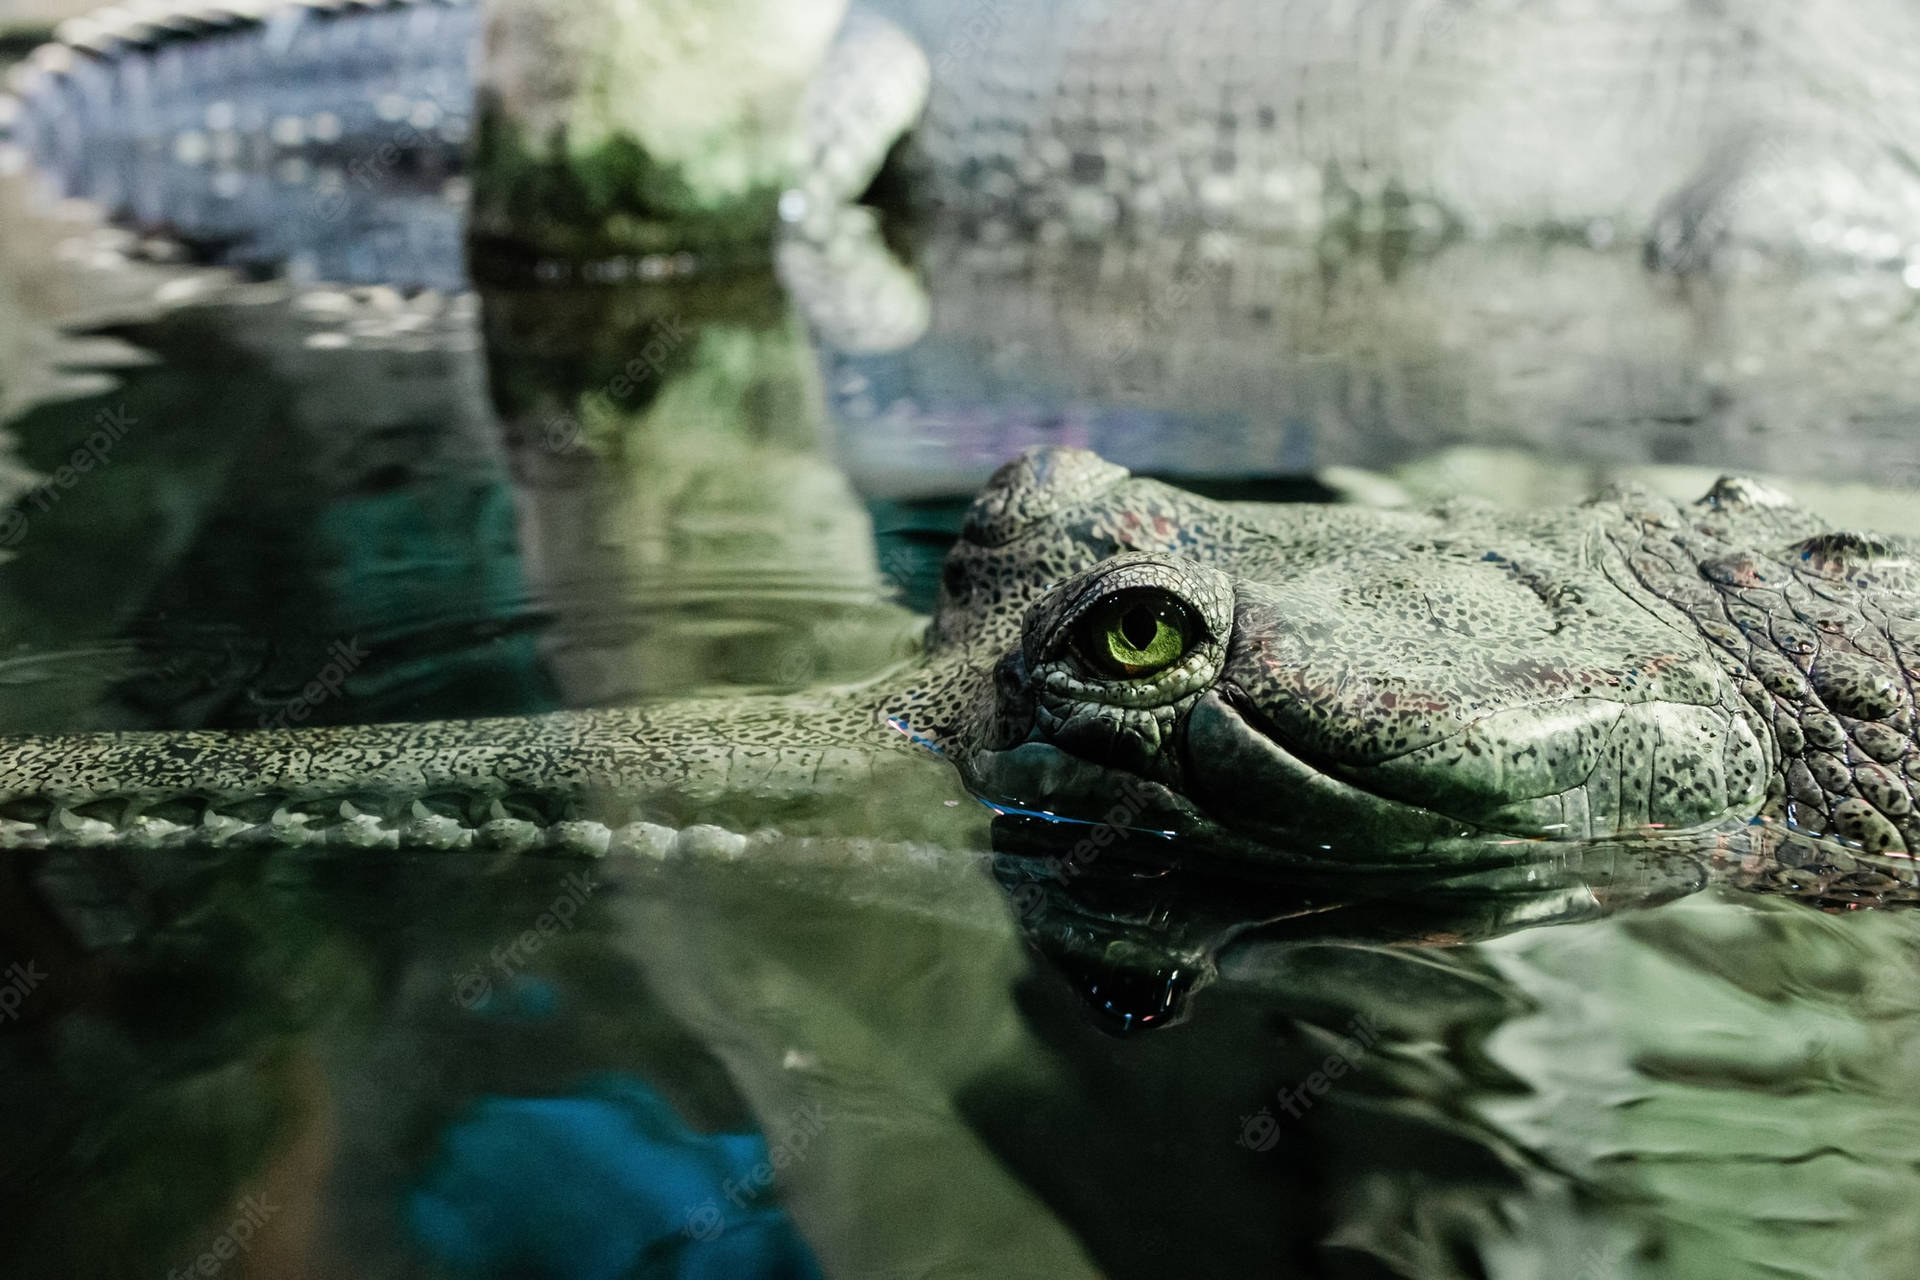 Gavial Crocodile Underwater Nature Photography Wallpaper